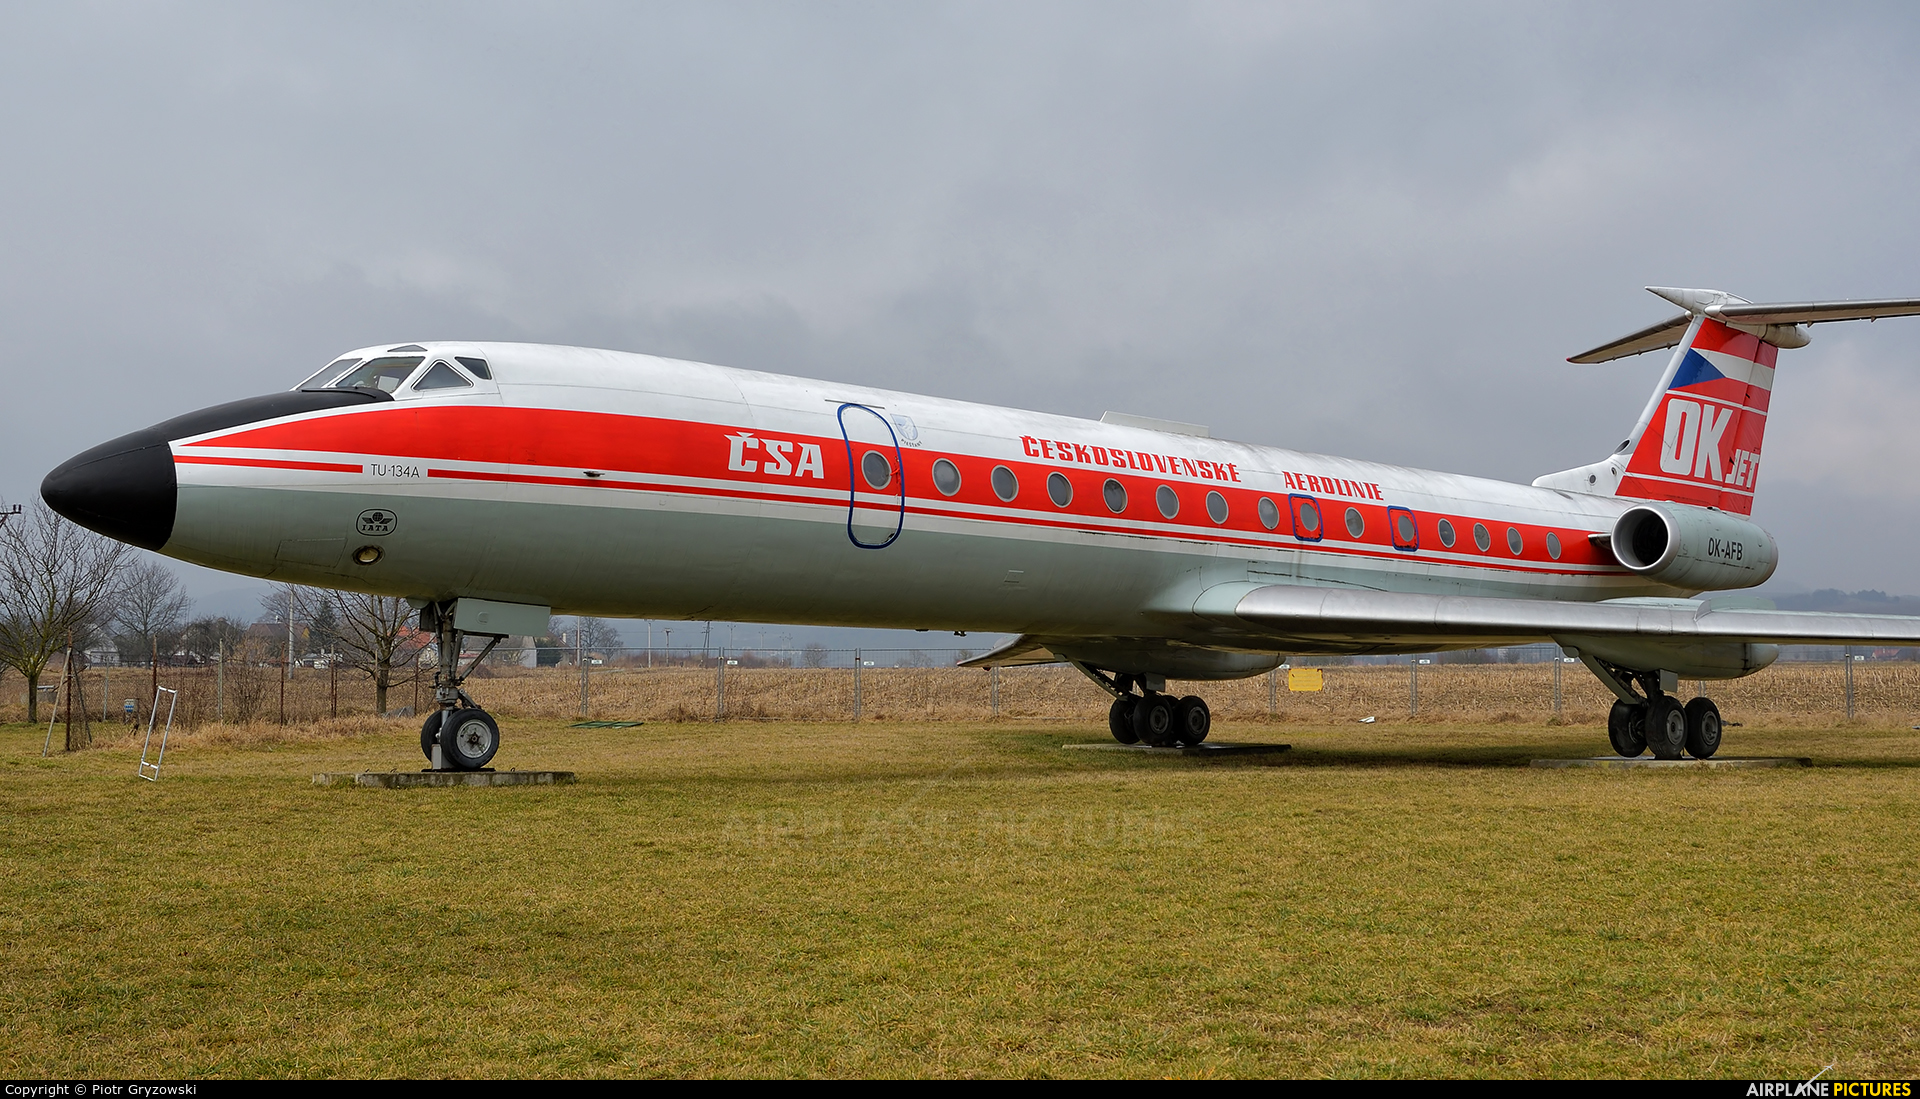 CSA - Czechoslovak Airlines OK-AFB aircraft at Dubnica nad Vahom - Slavnica